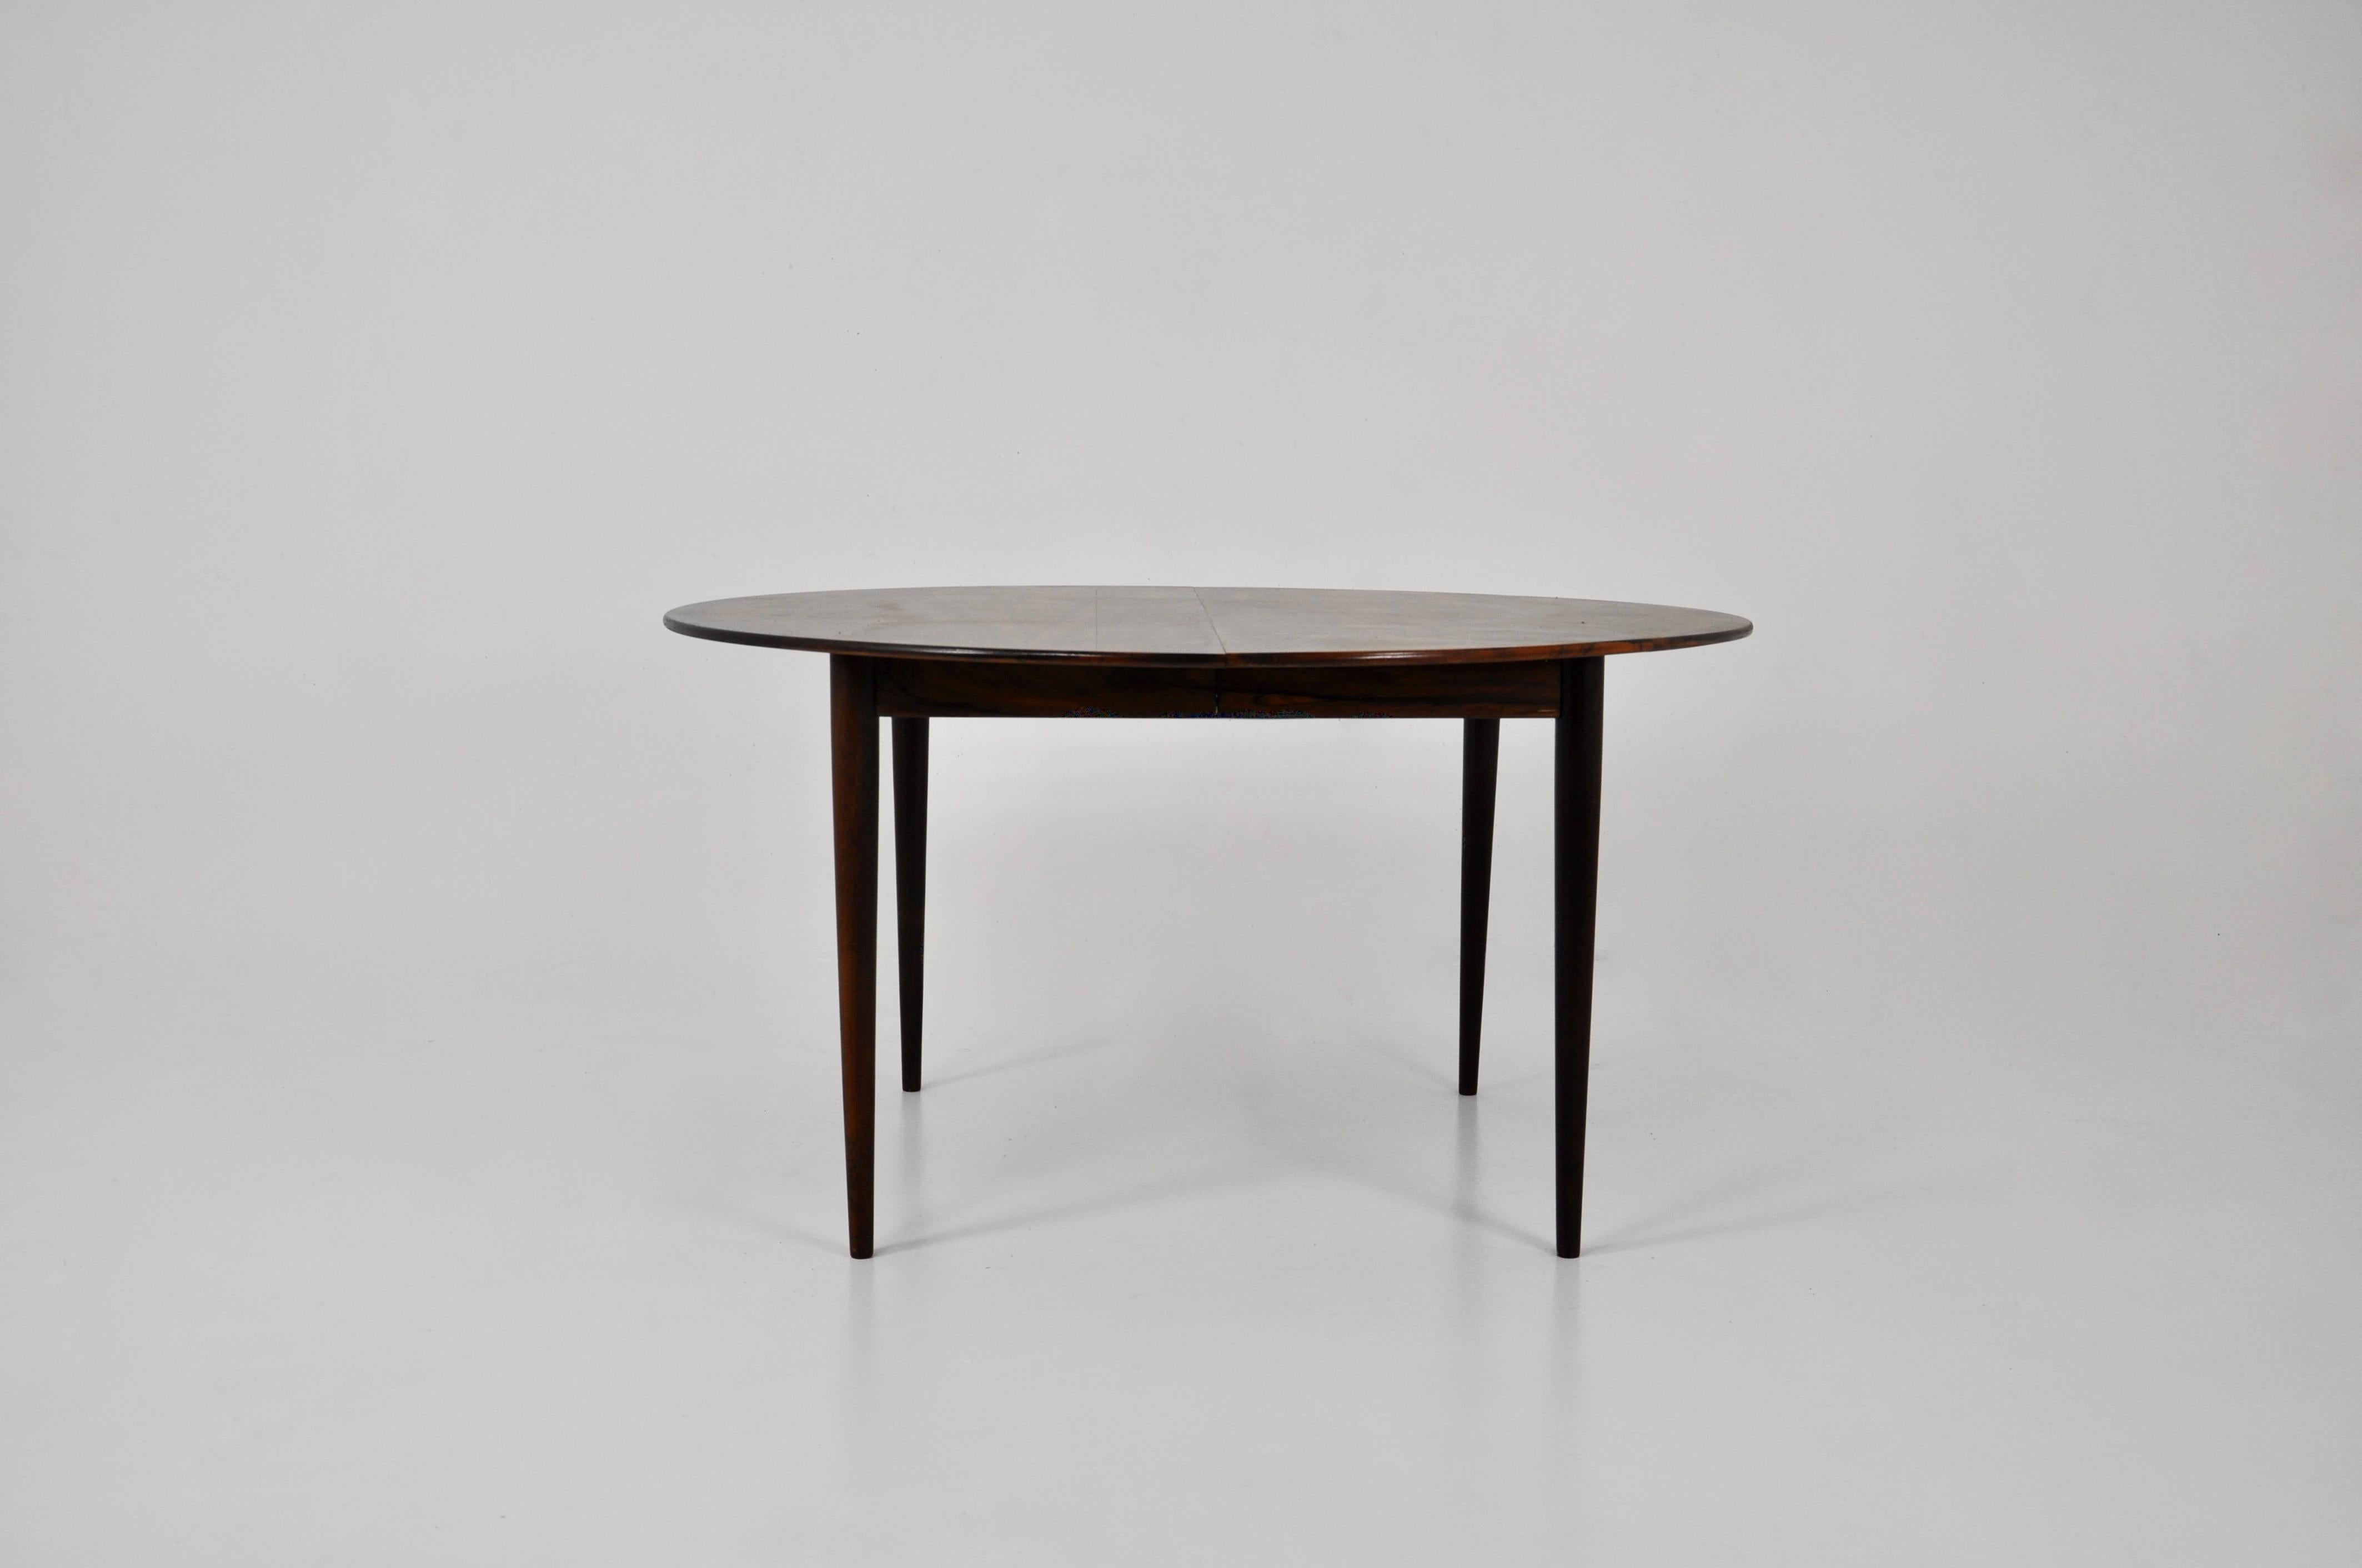 Scandinavian Modern Round Dining Table by Grete Jalk for CJ Rosengaarden, 1960s For Sale